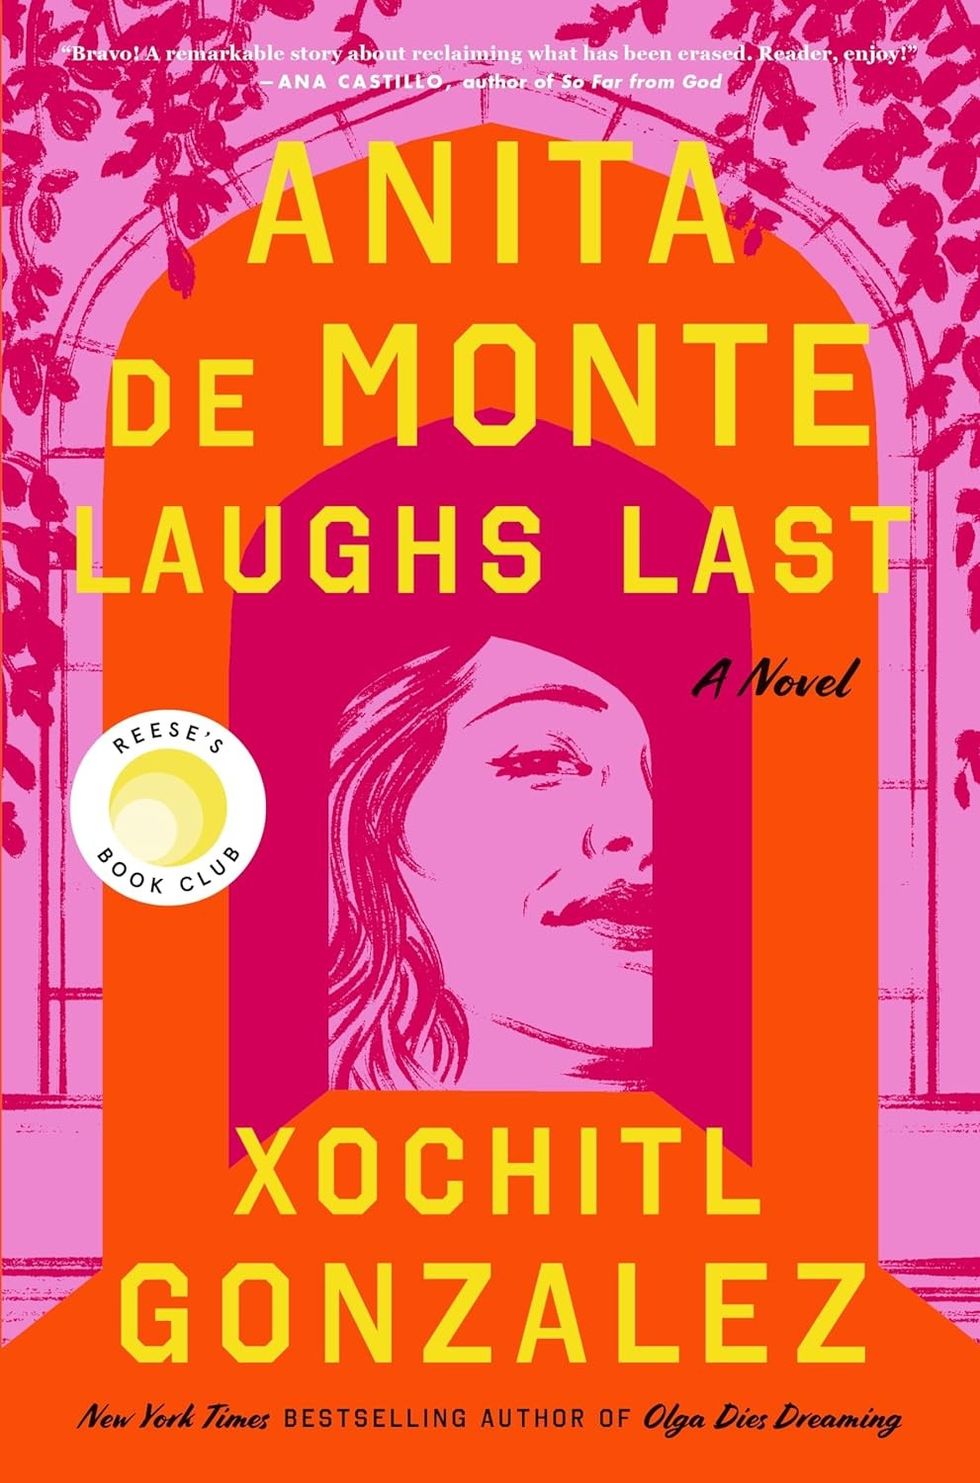 "Anita de Monte Laughs Last" by Xochitl Gonzalez